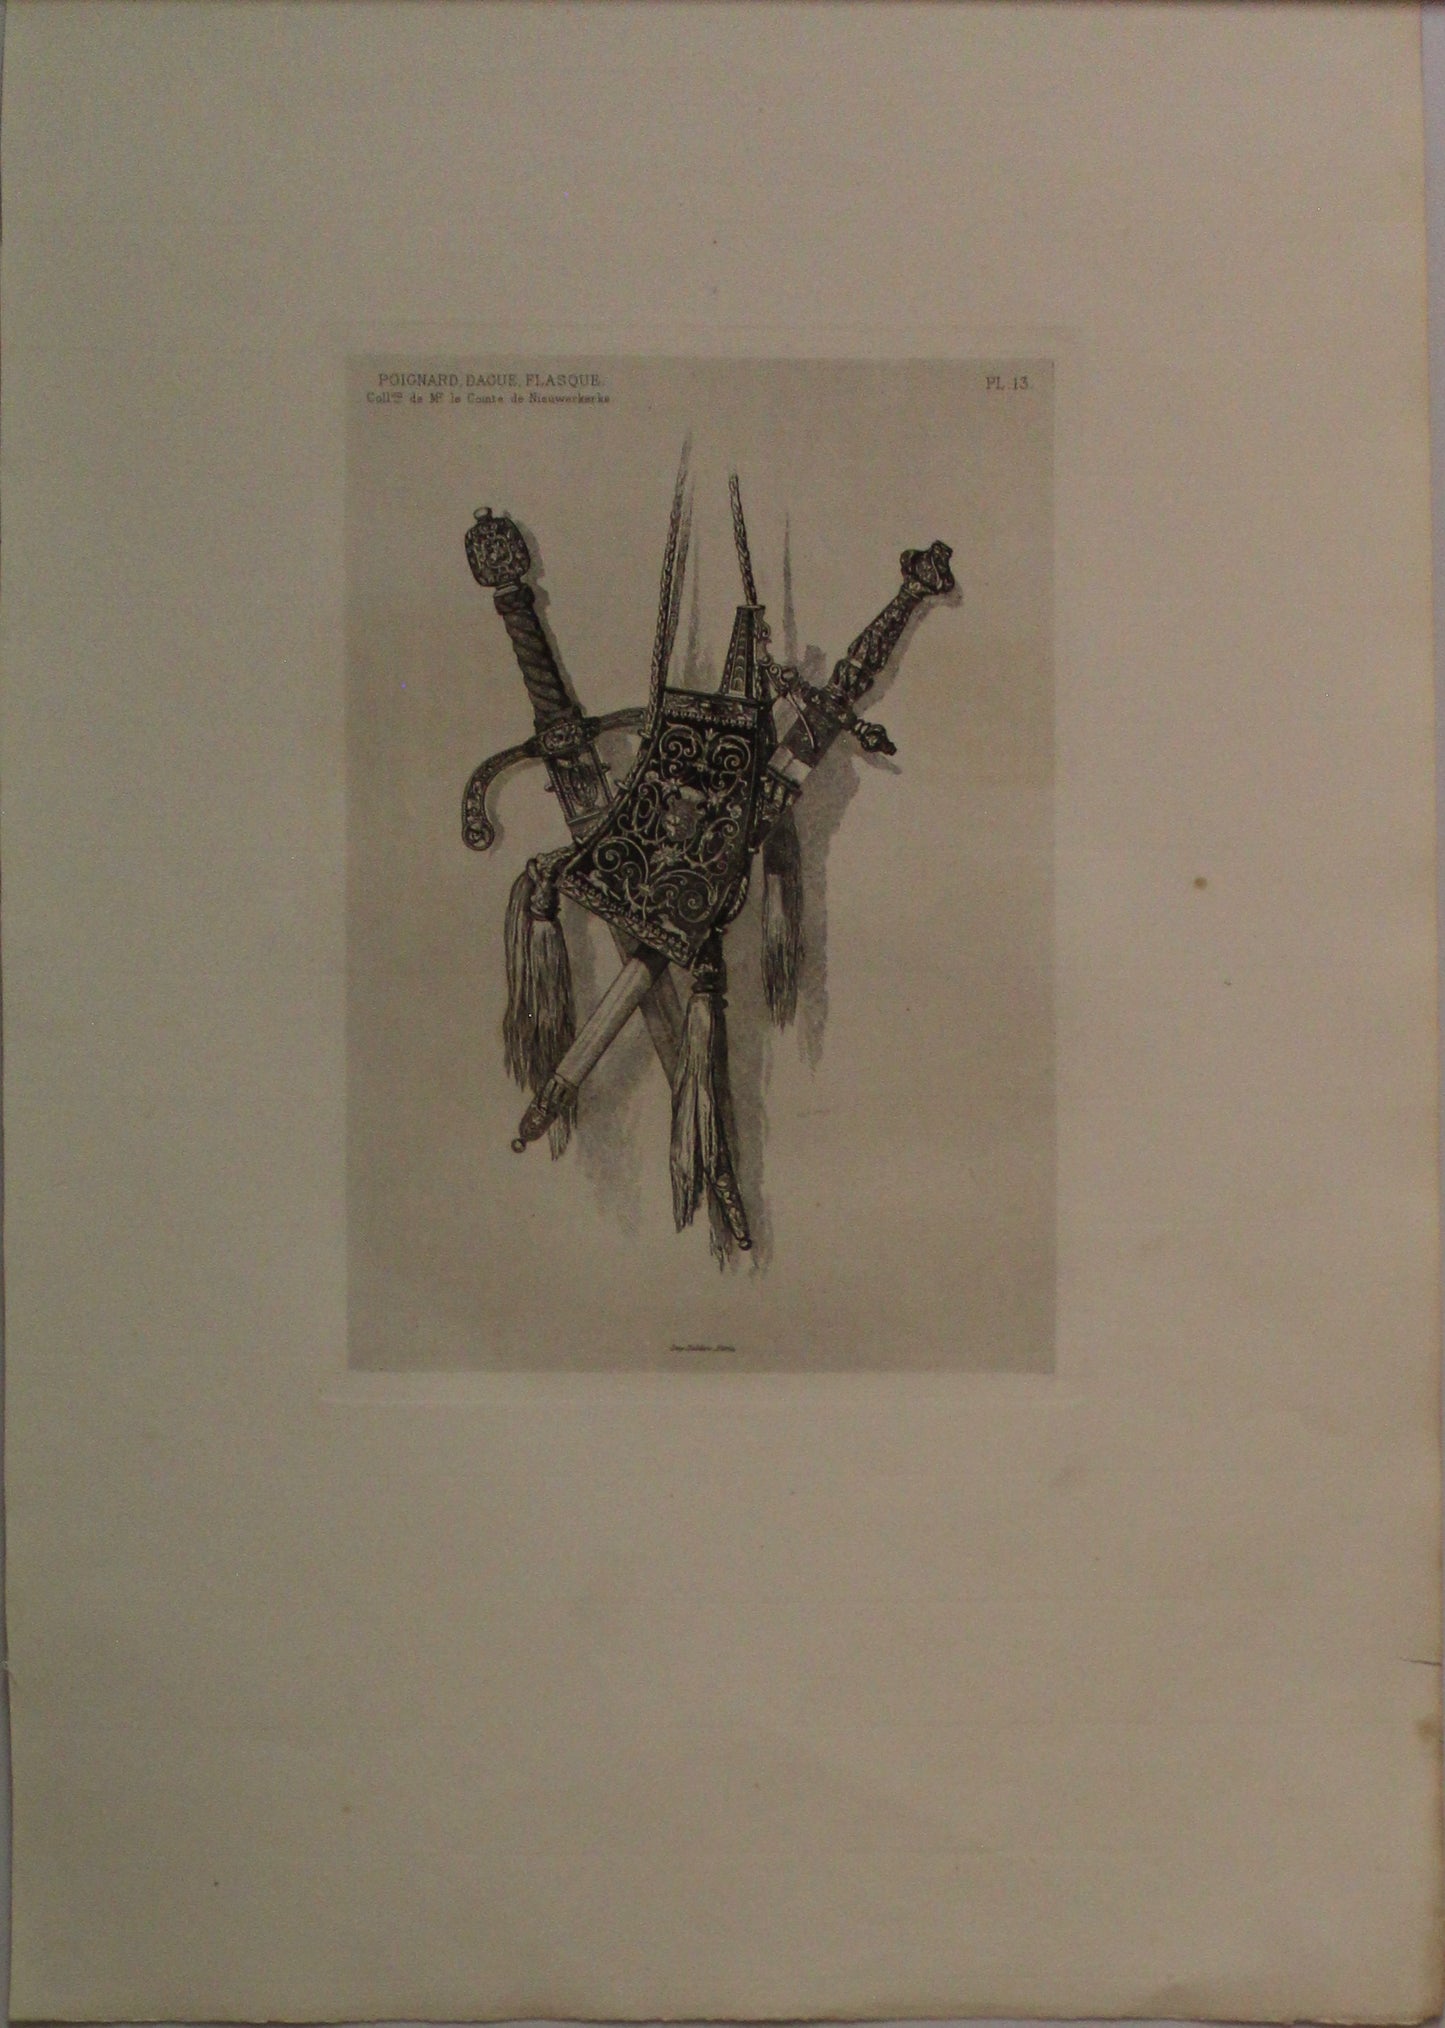 Decorator, Weapons, Les Collections, Celebres, D'Oeuvres D'Art, Poignard, Dague, Flasque, From the Collection M le Comte de Niewerkerke, Plate 13, 1864